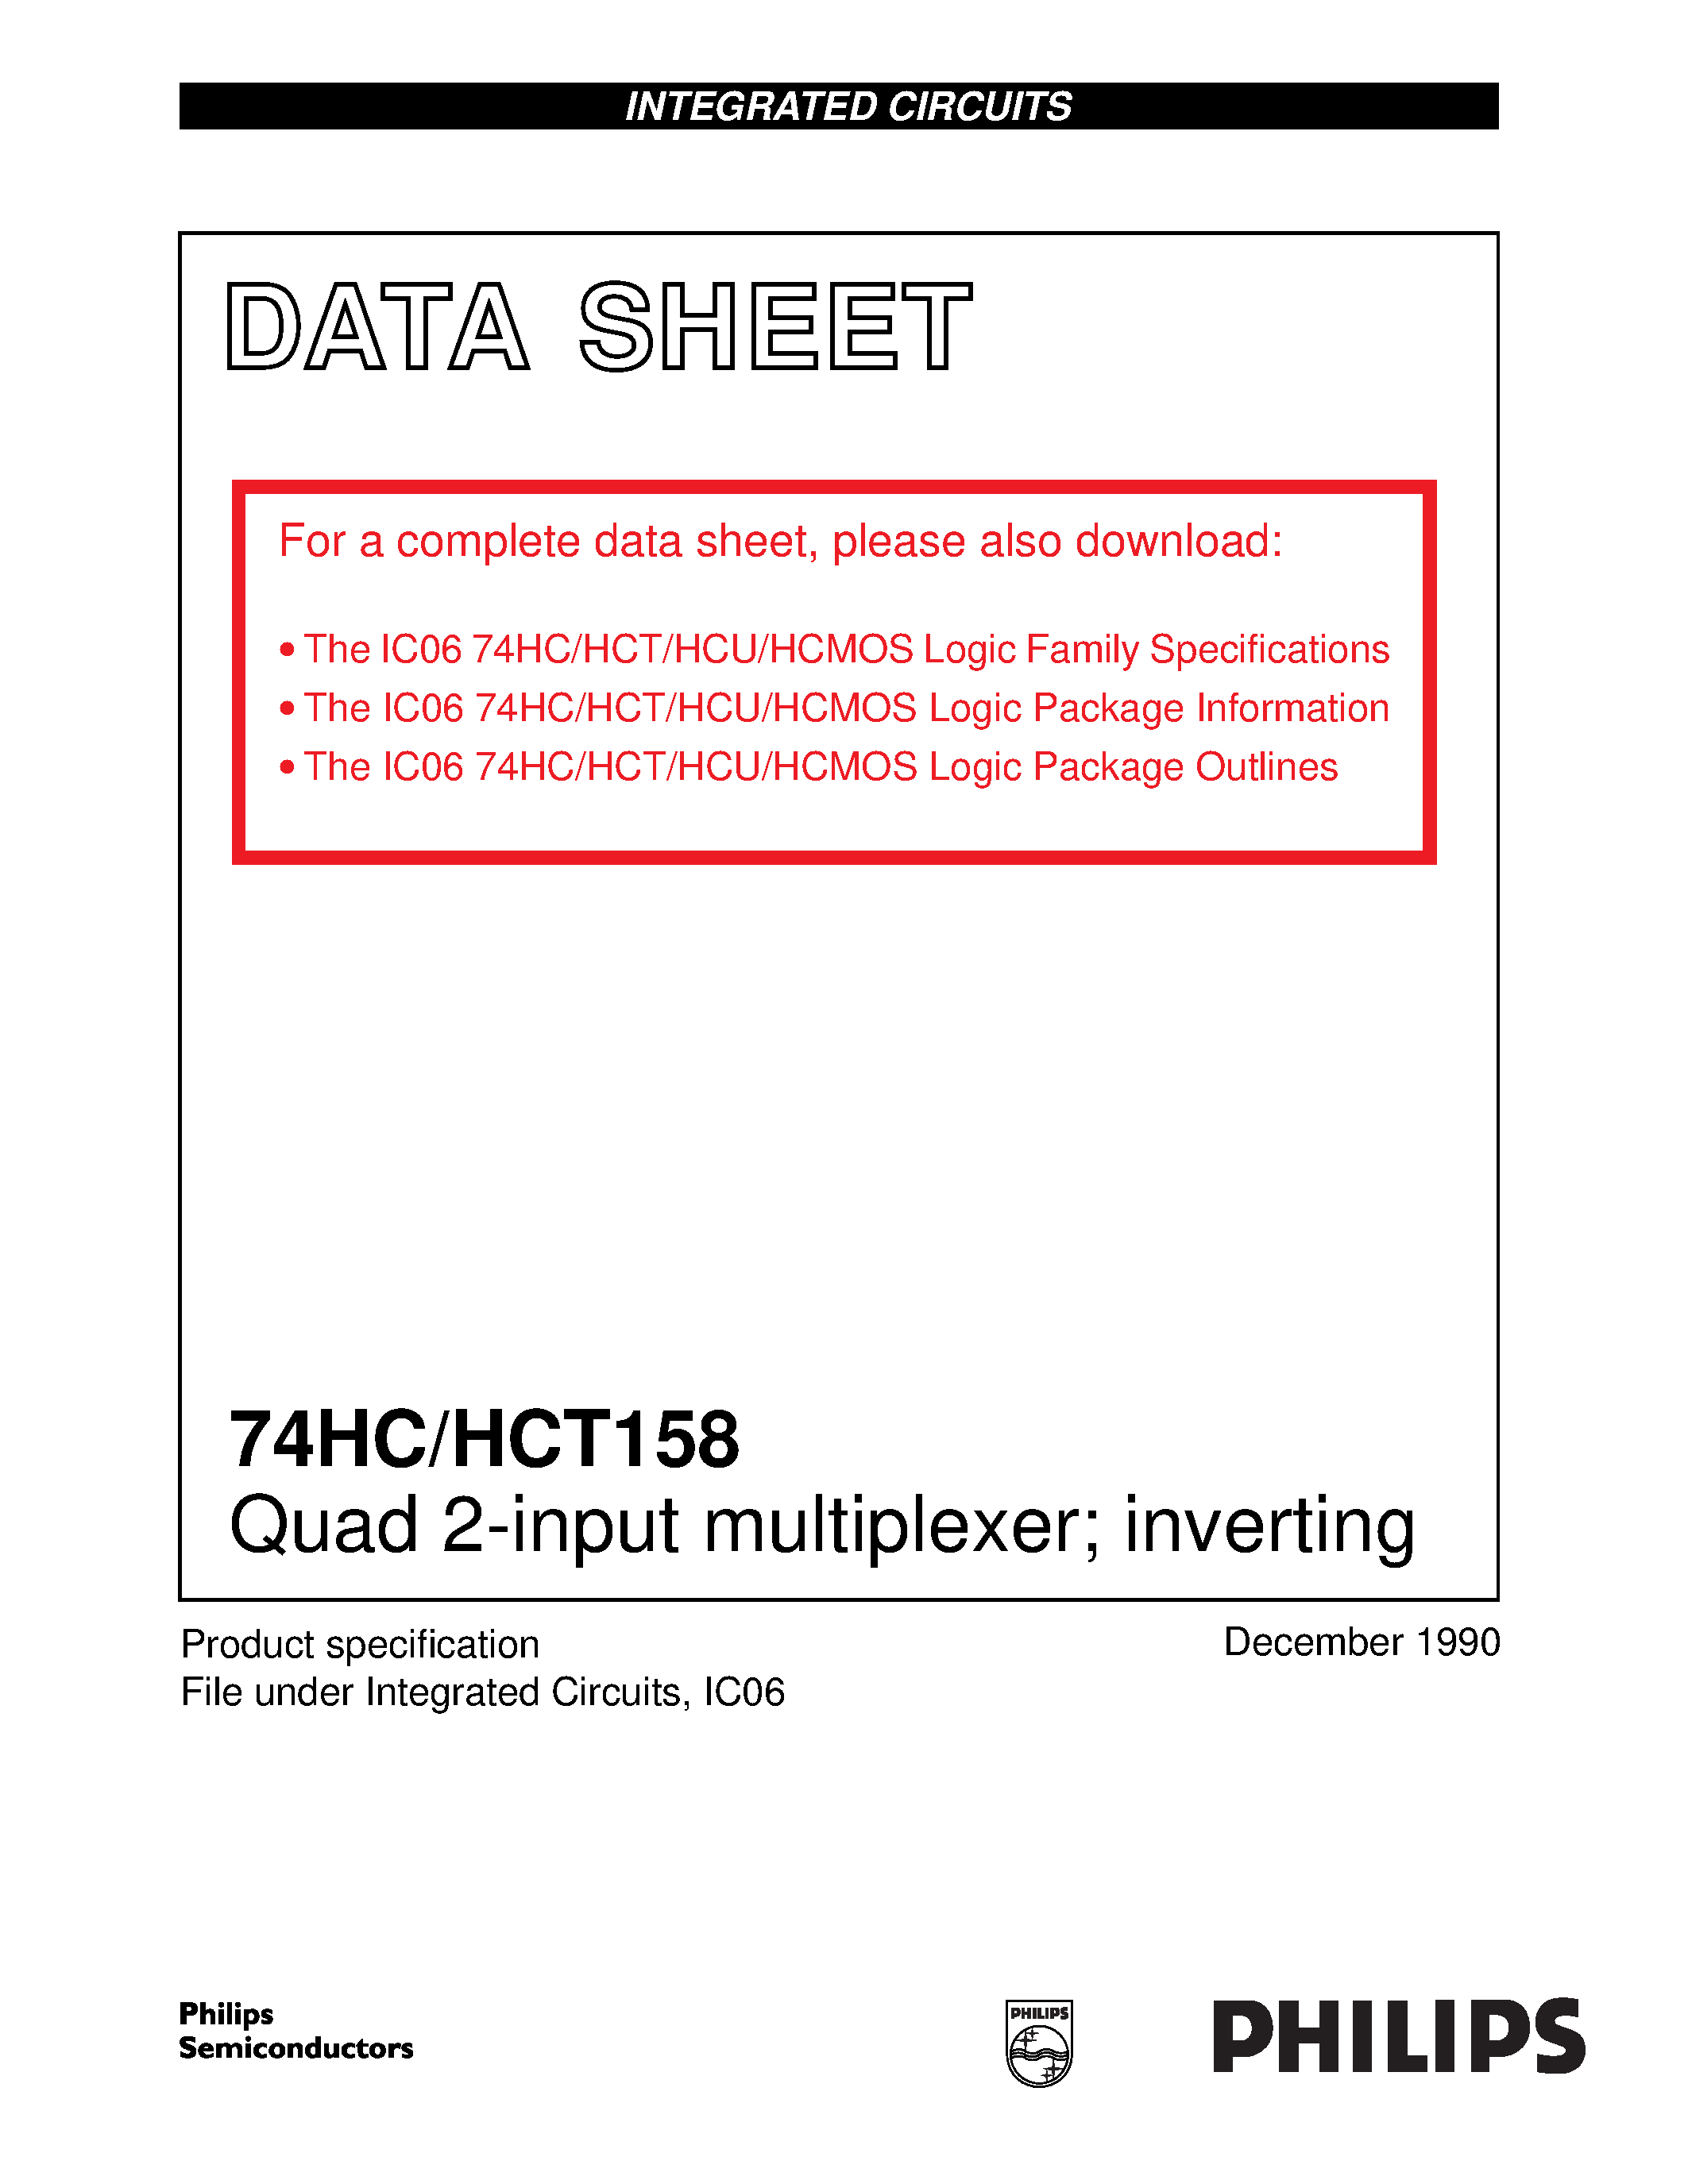 Datasheet 74HCT158 - Quad 2-input multiplexer inverting page 1